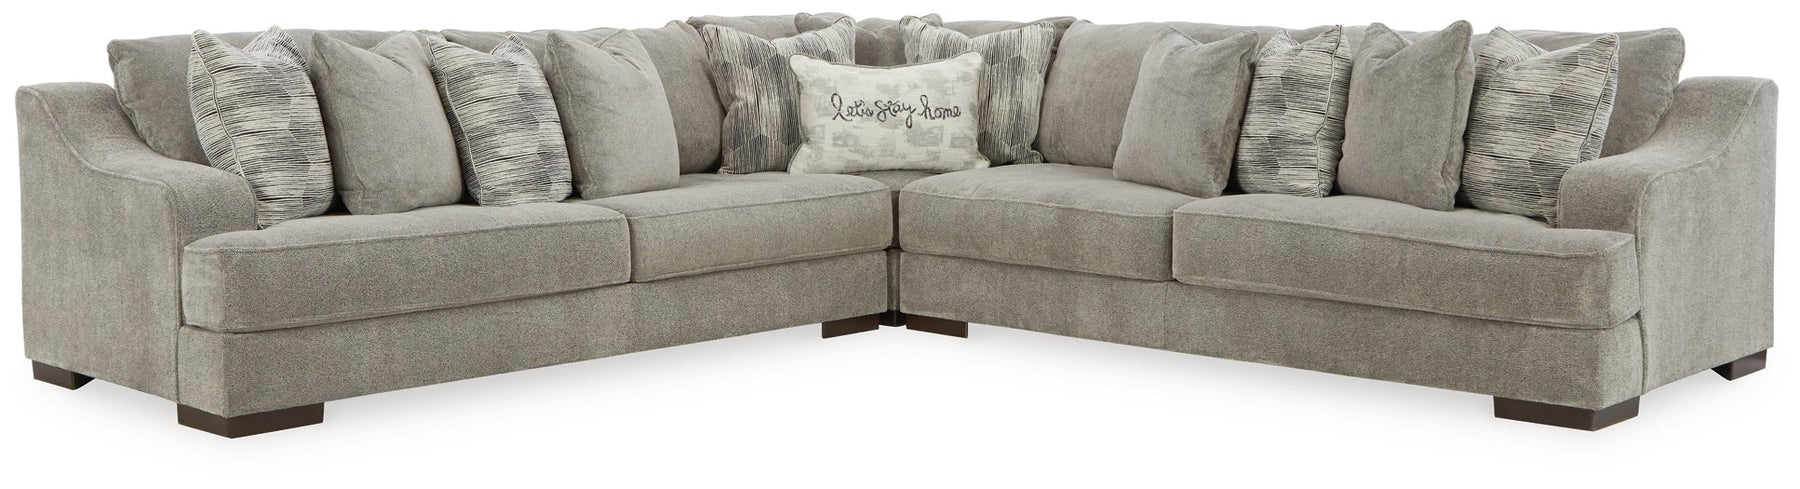 Bayless Living Room Set - Half Price Furniture